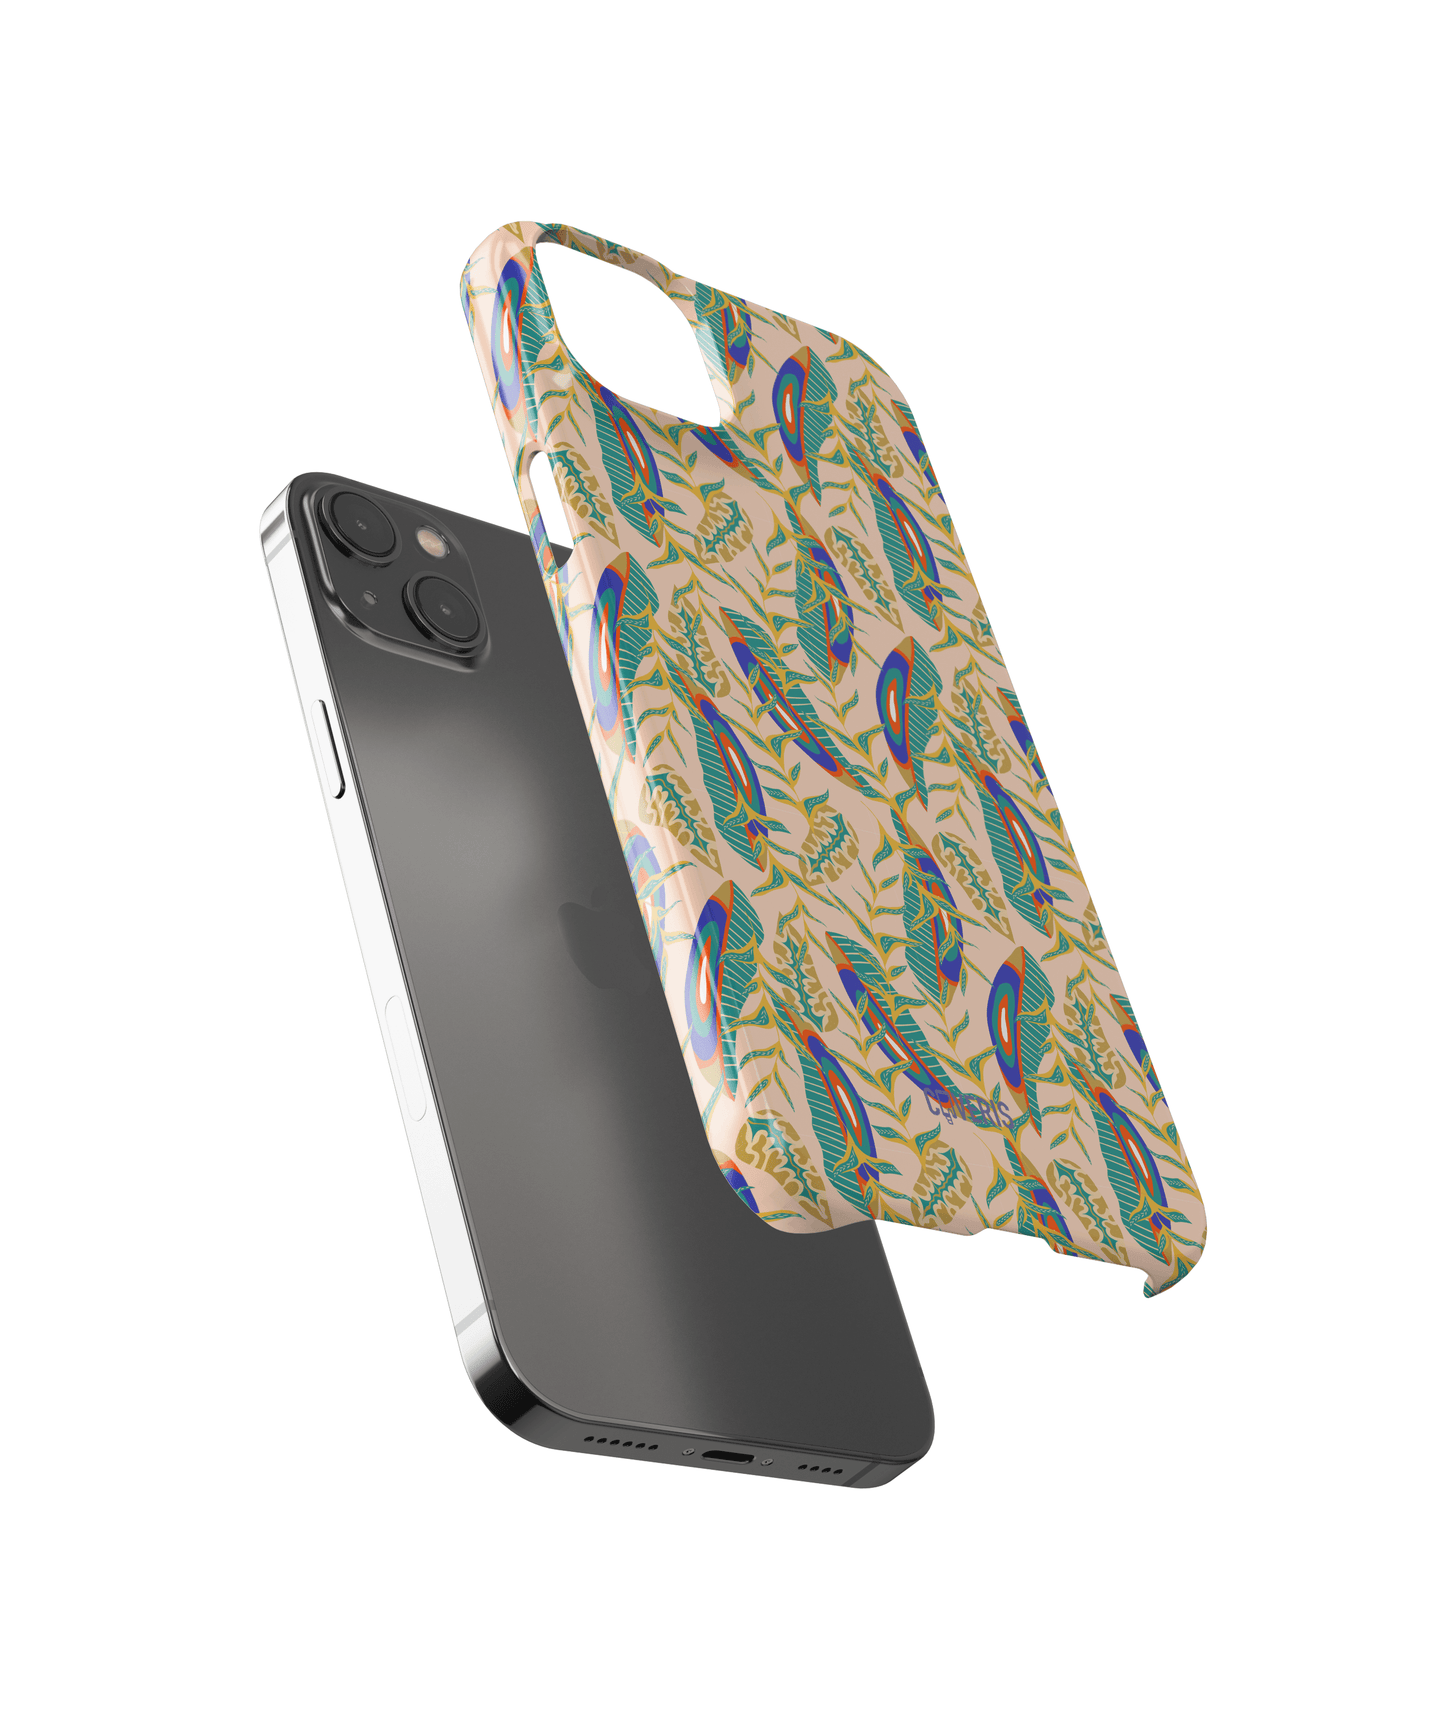 Breezy - Samsung Galaxy A50 phone case